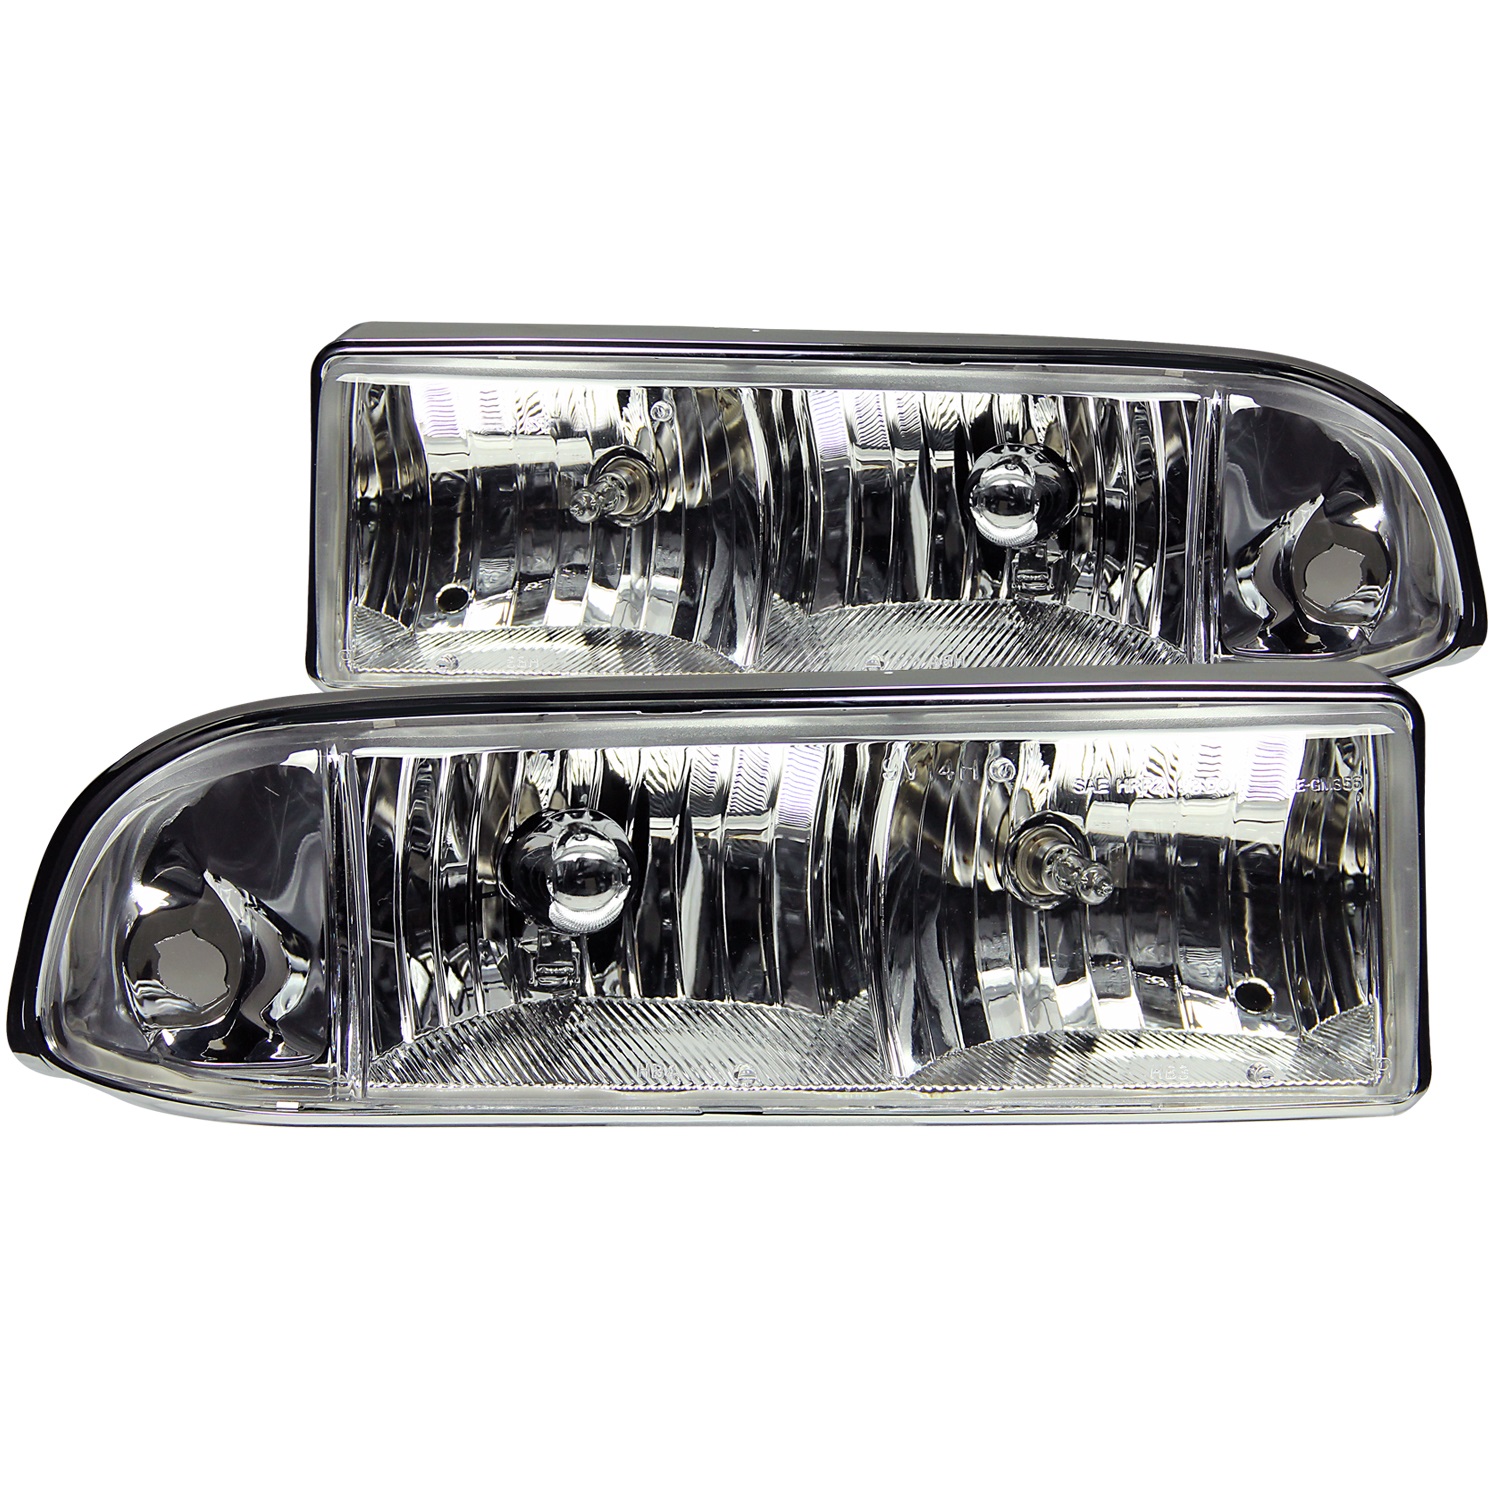 Anzo USA Anzo USA 111014 Crystal Headlight Set Fits 98-04 S10 Blazer S10 Pickup